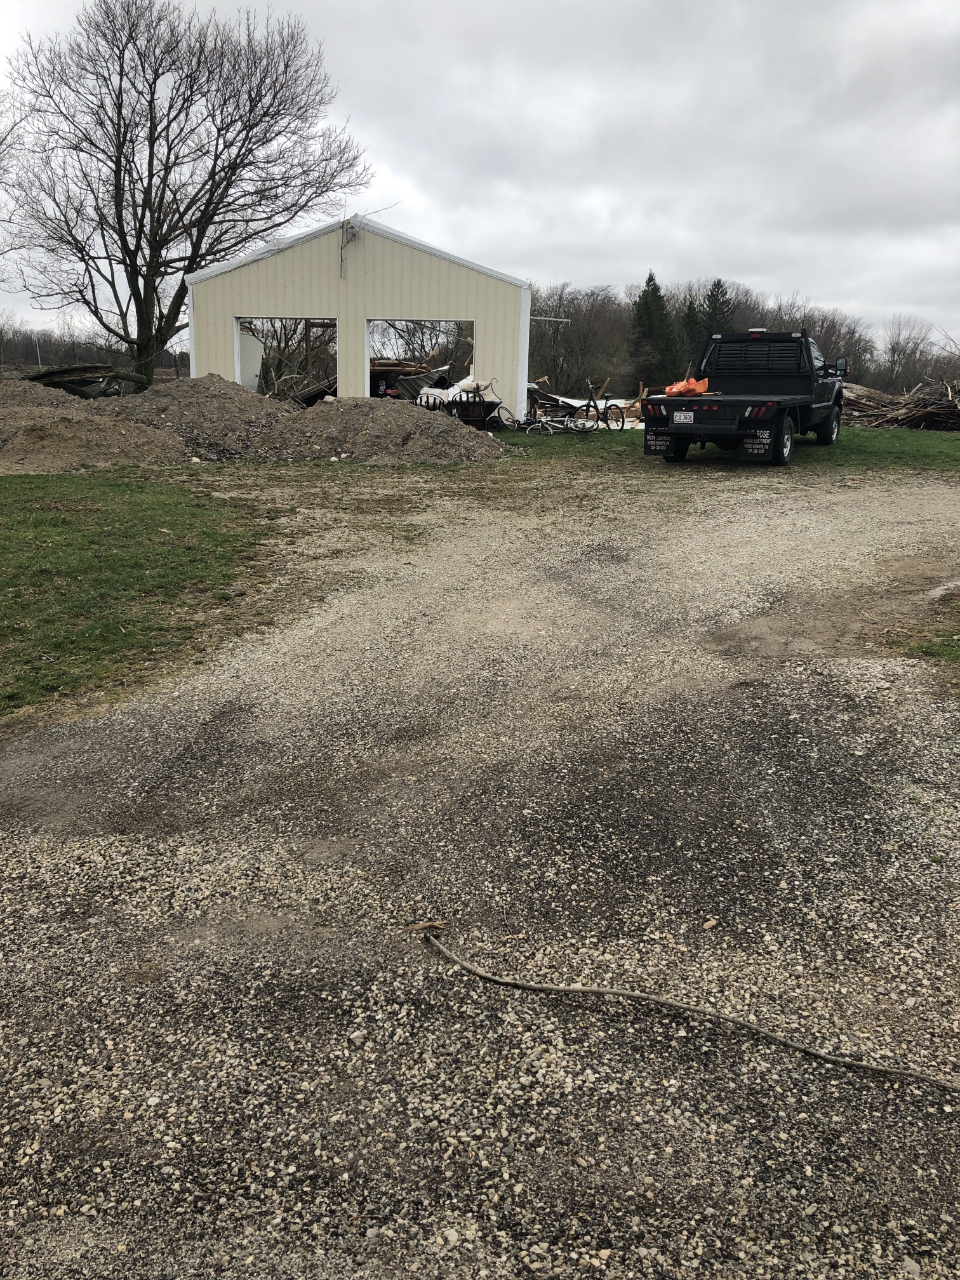 EF2 tornado damage near Shelby, OH April 14, 2019